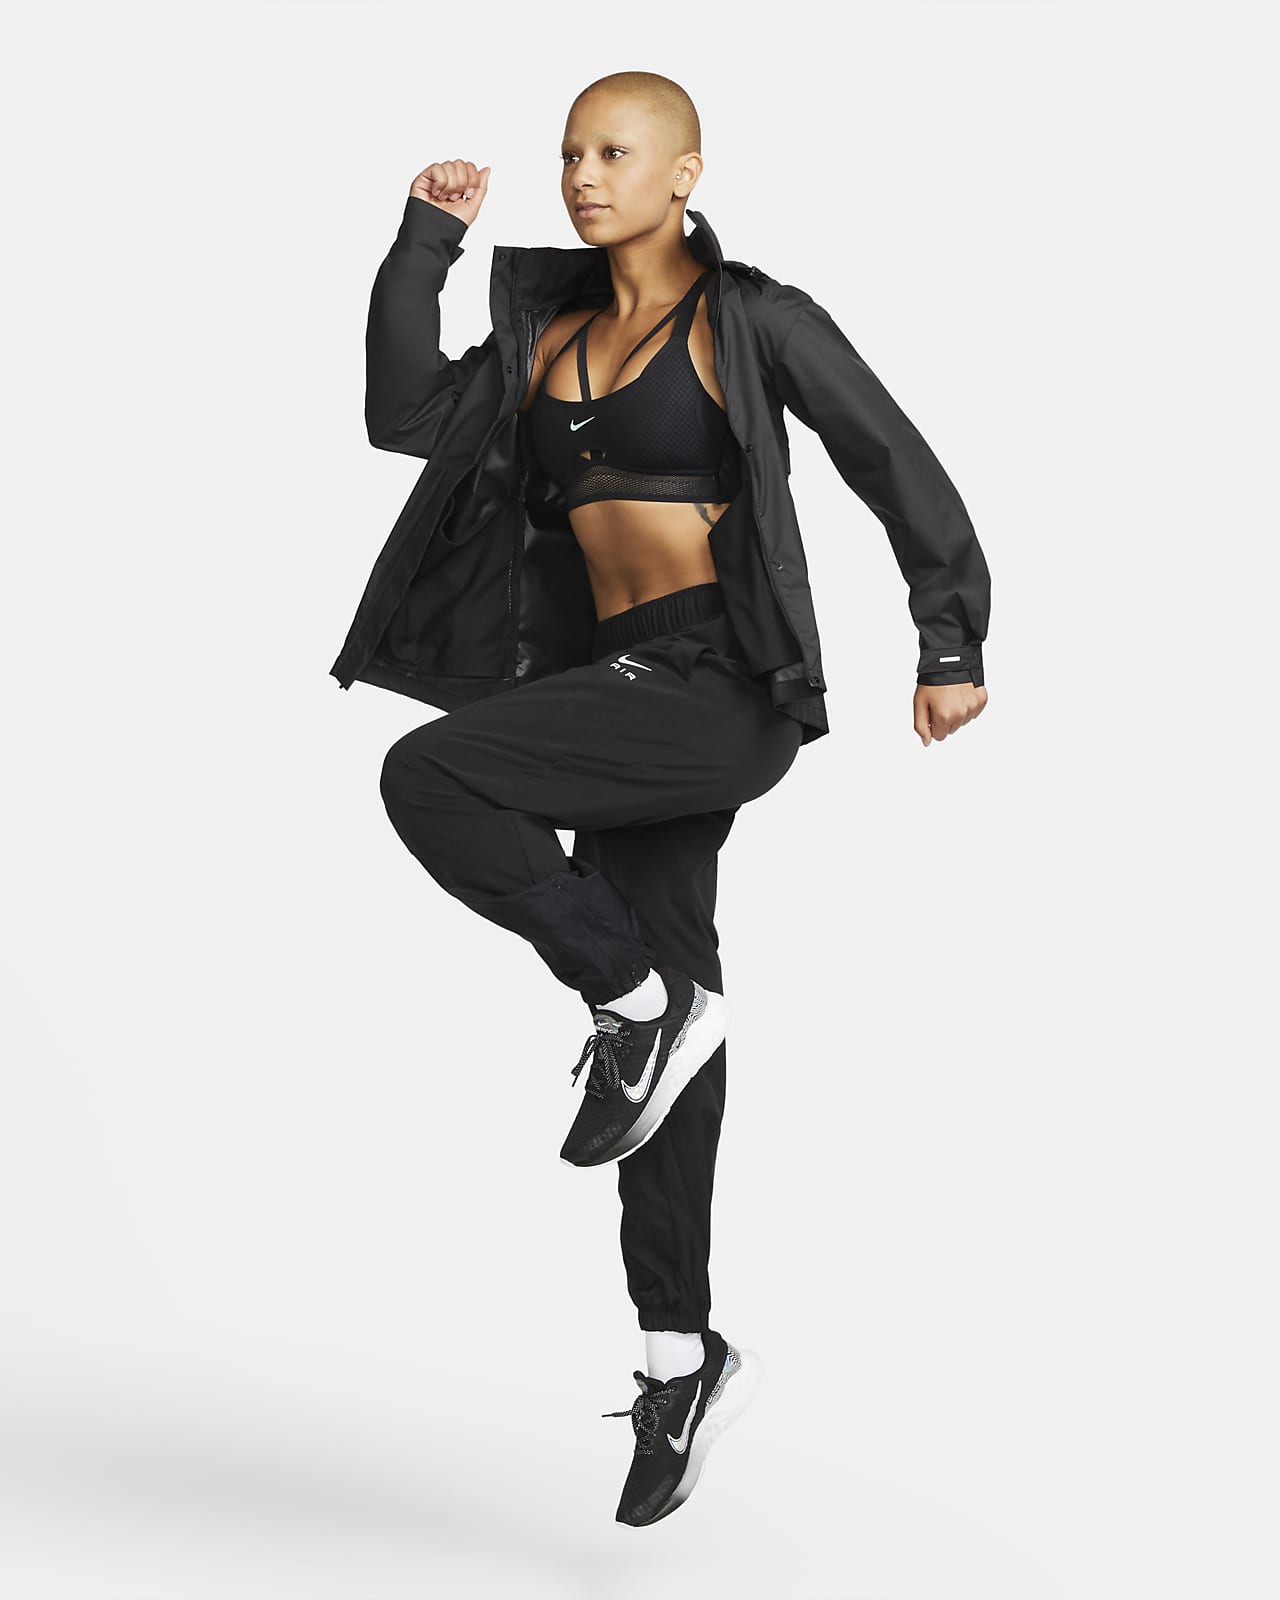 Nike Women\'s Jacket. Fast Running Repel